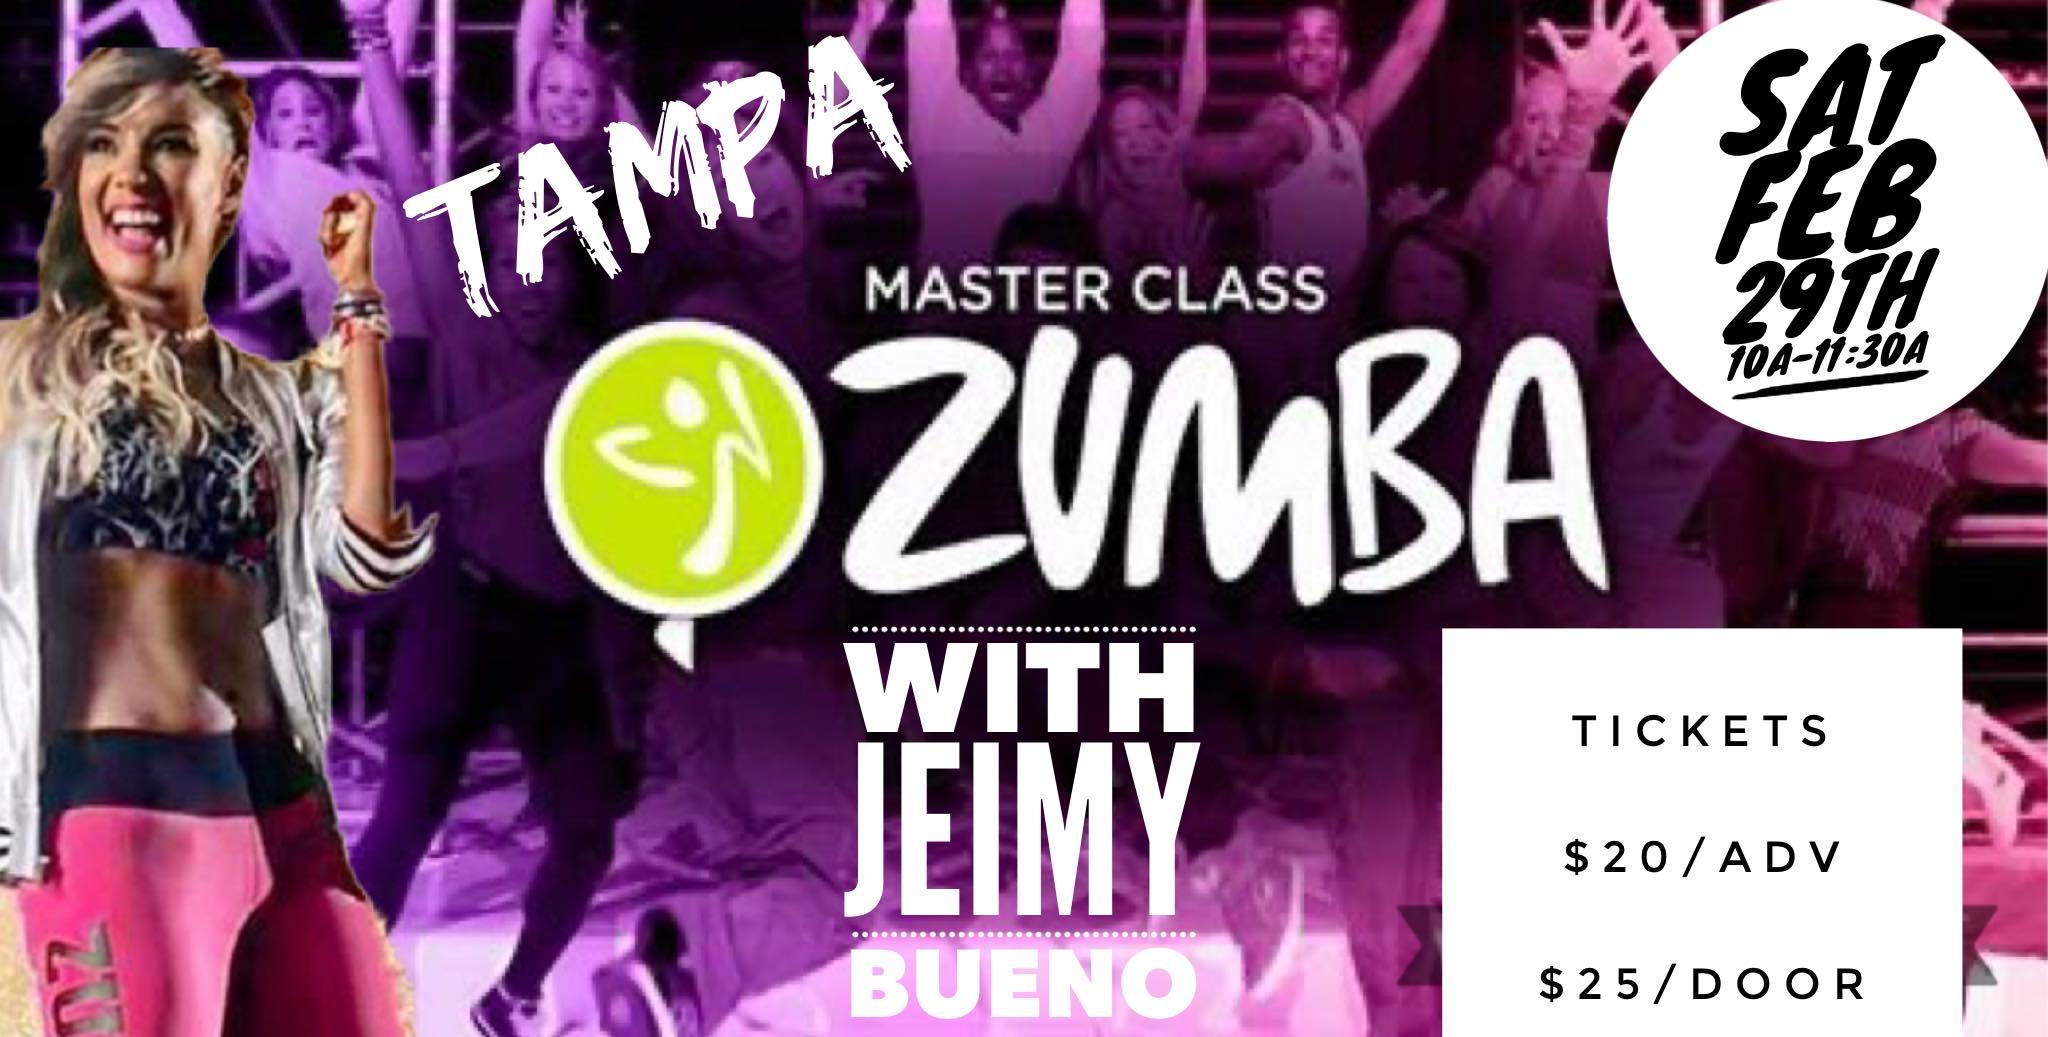 Jeimy Bueno Zumba Master Class in Tampa